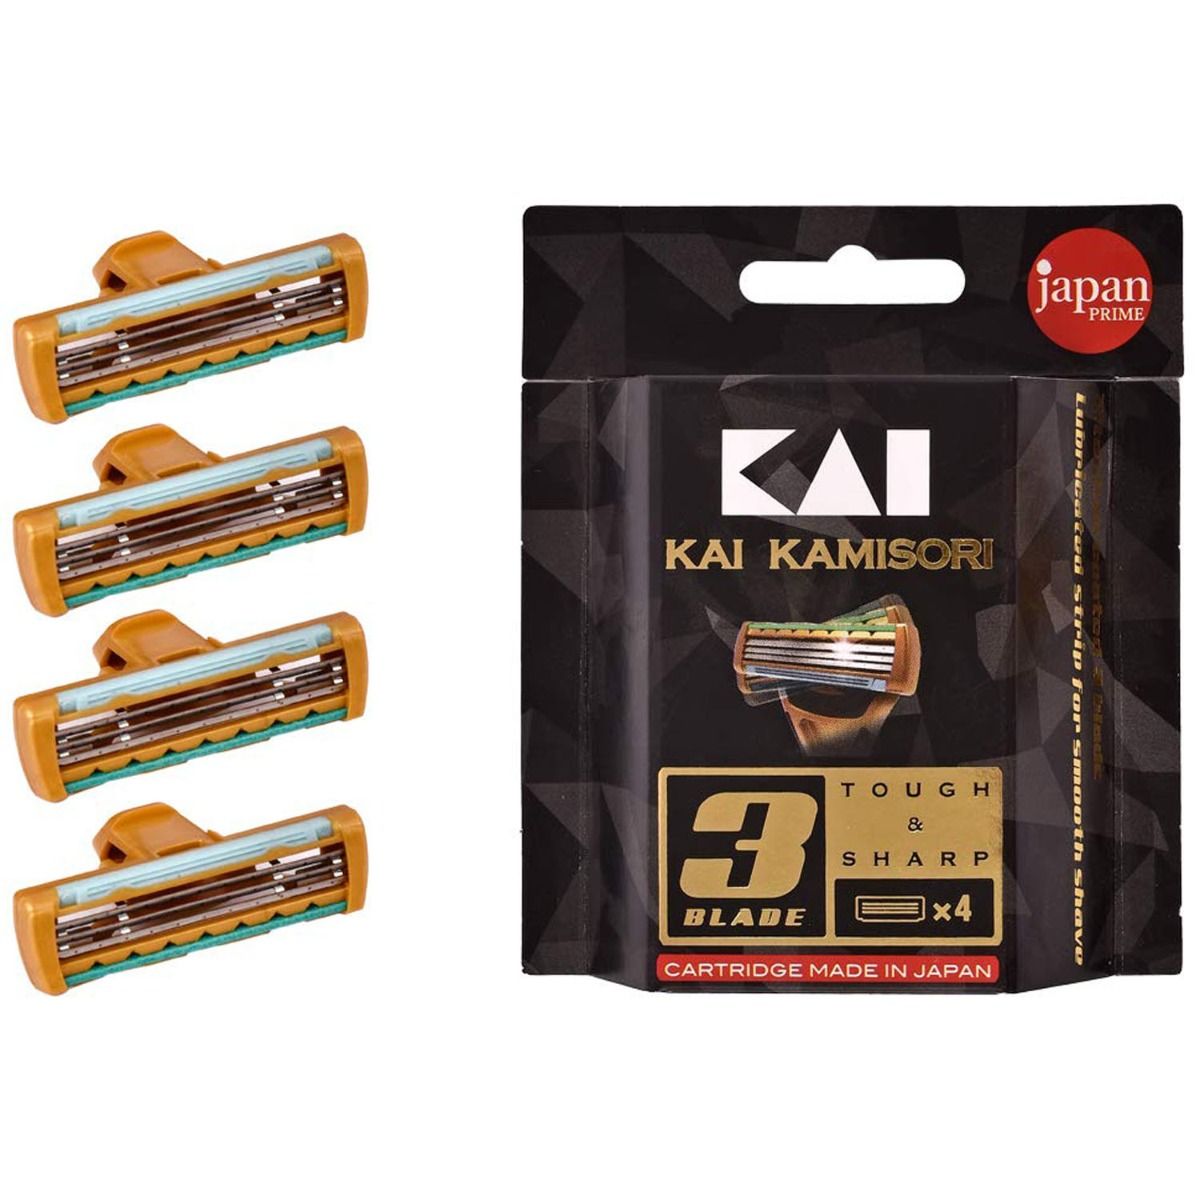 Kai Kamisori Cartridge, 1 Count, Pack of 1 